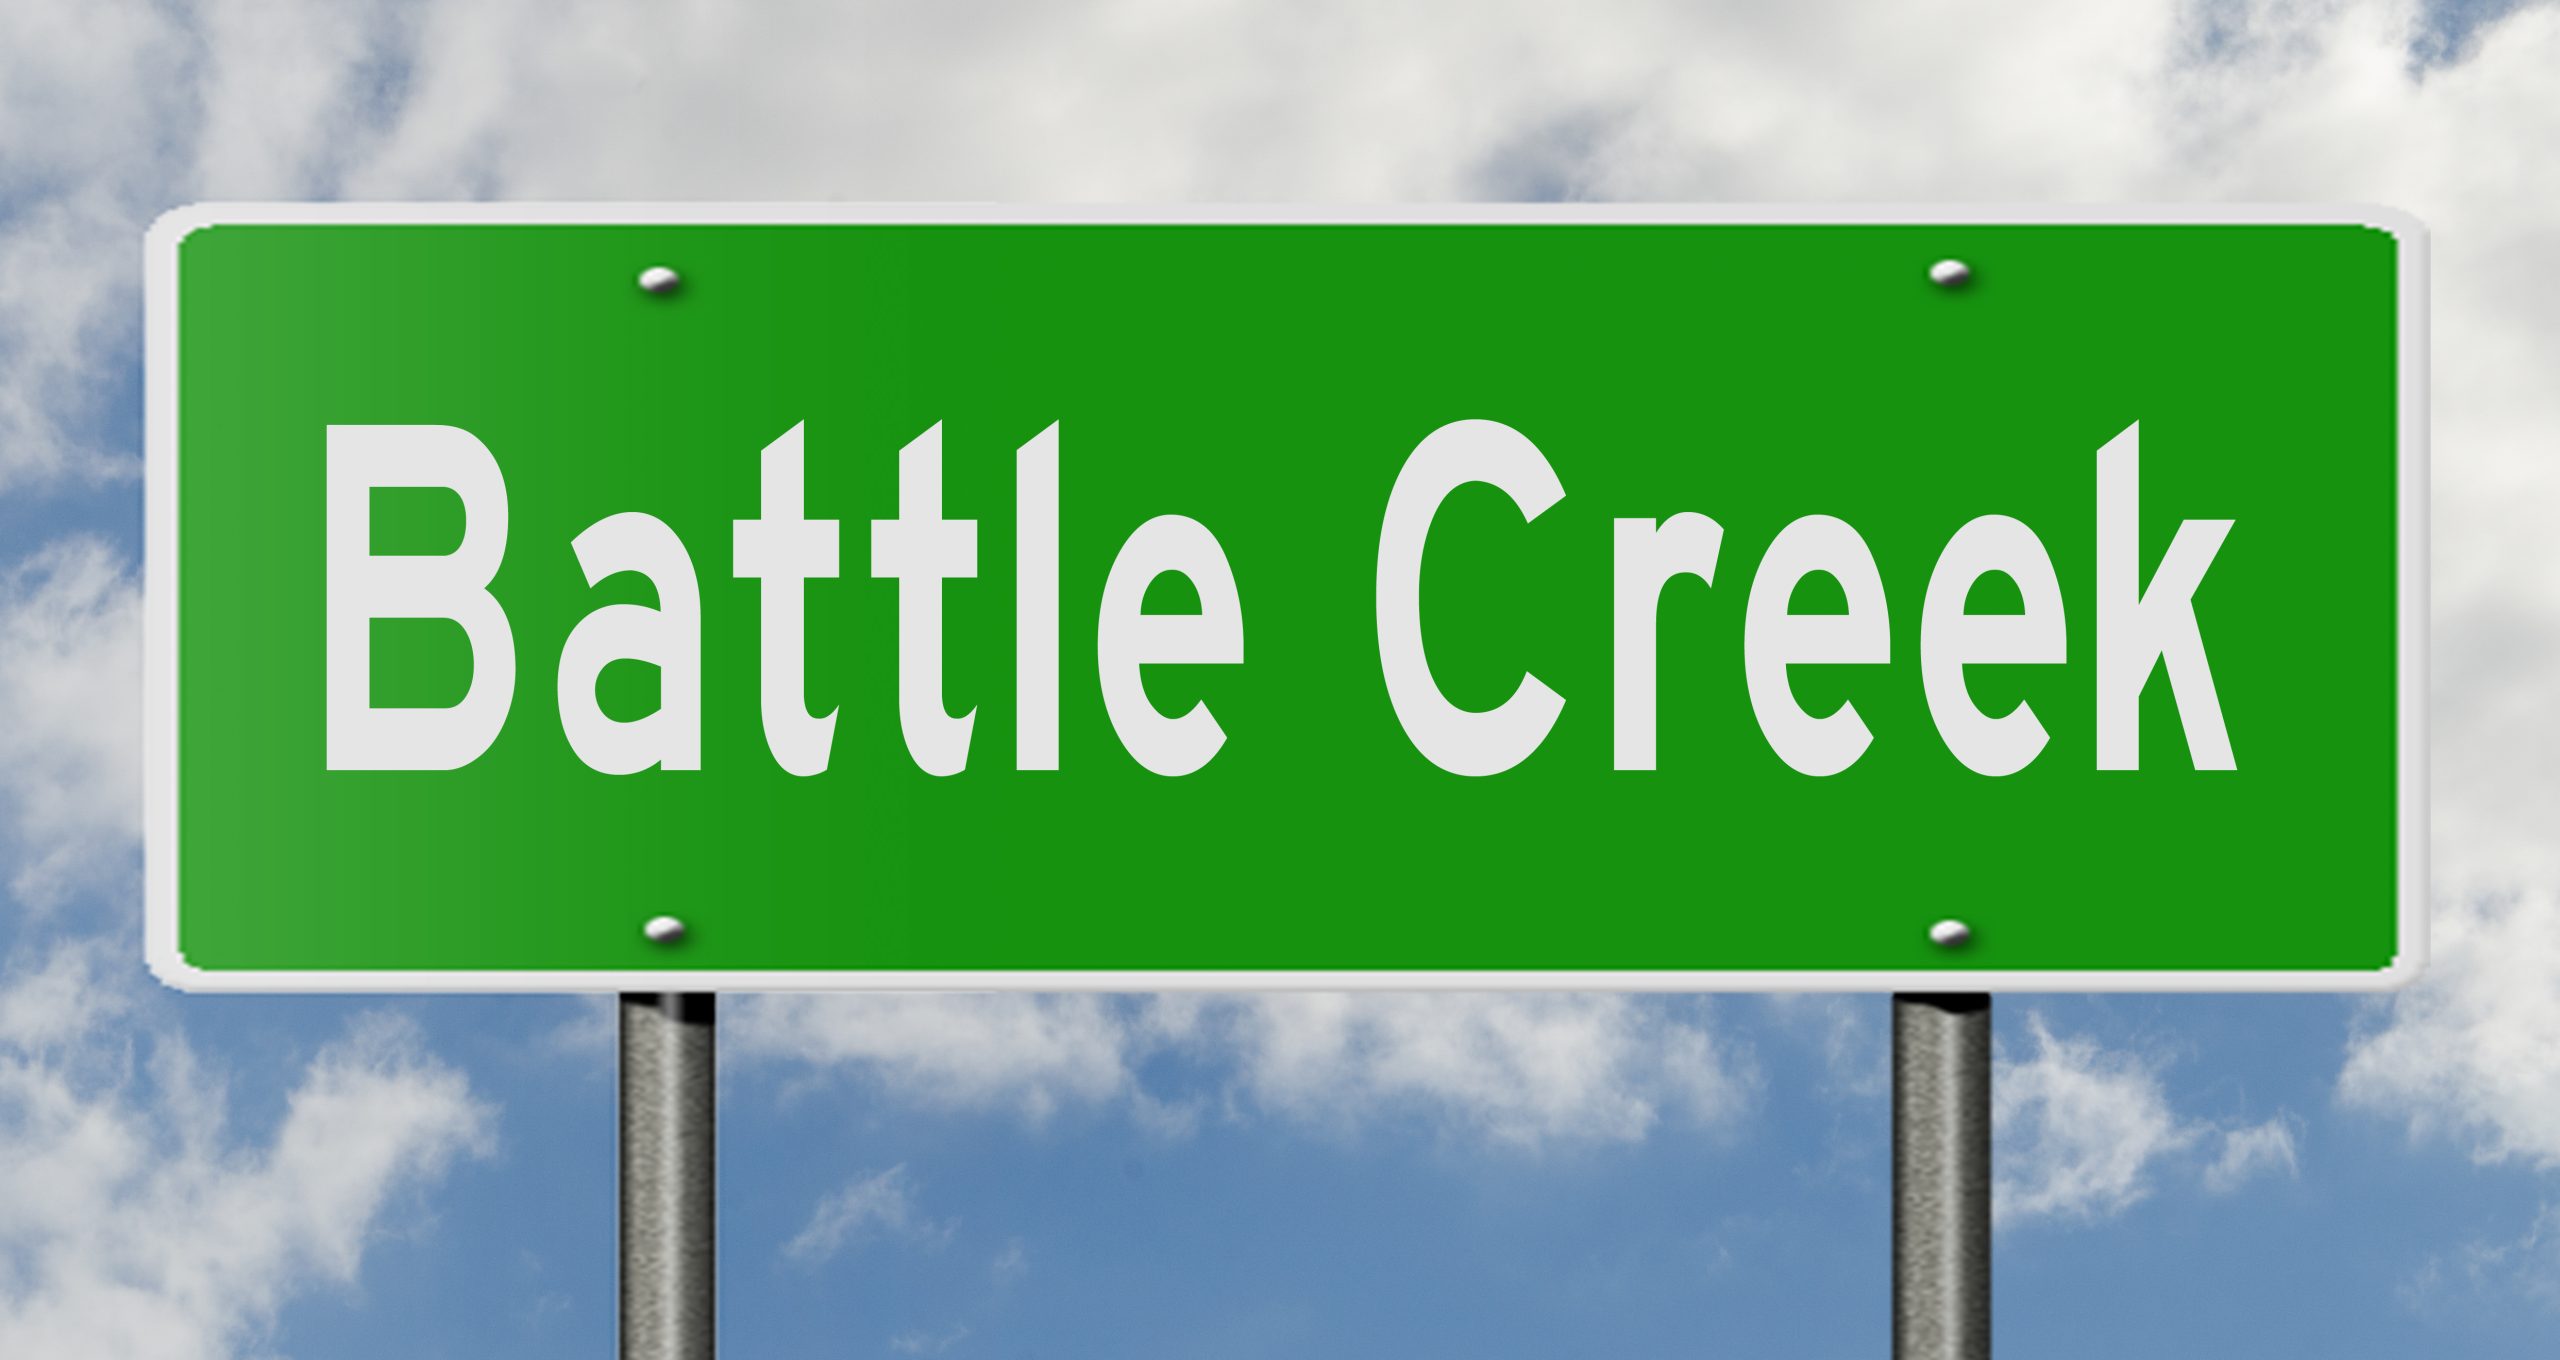 Sign for Battle Creek, Michigan